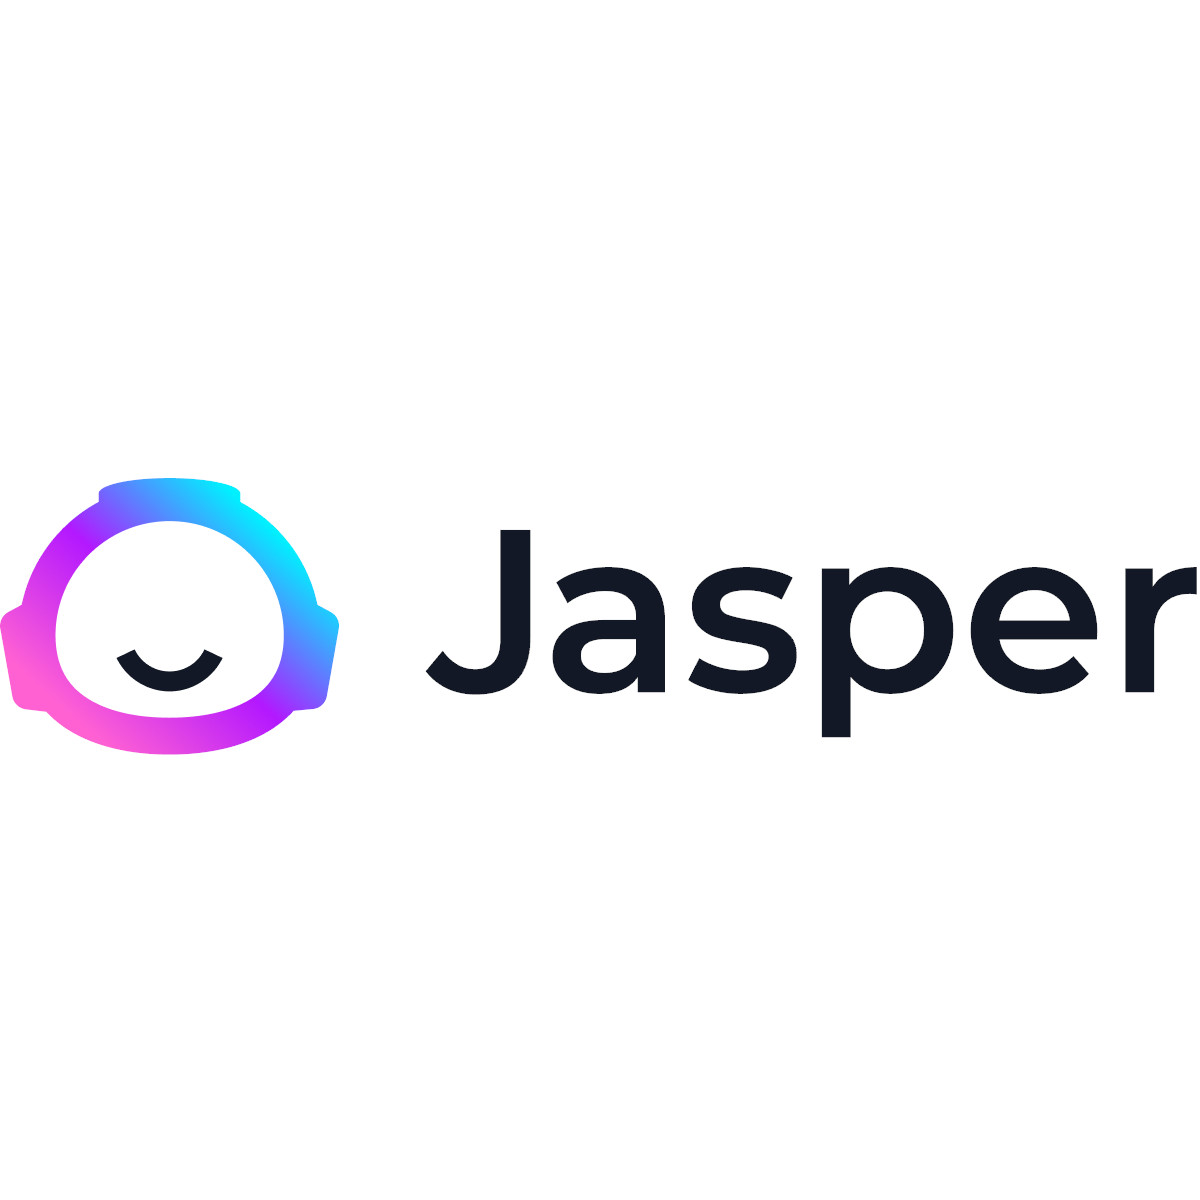 jasper logo 